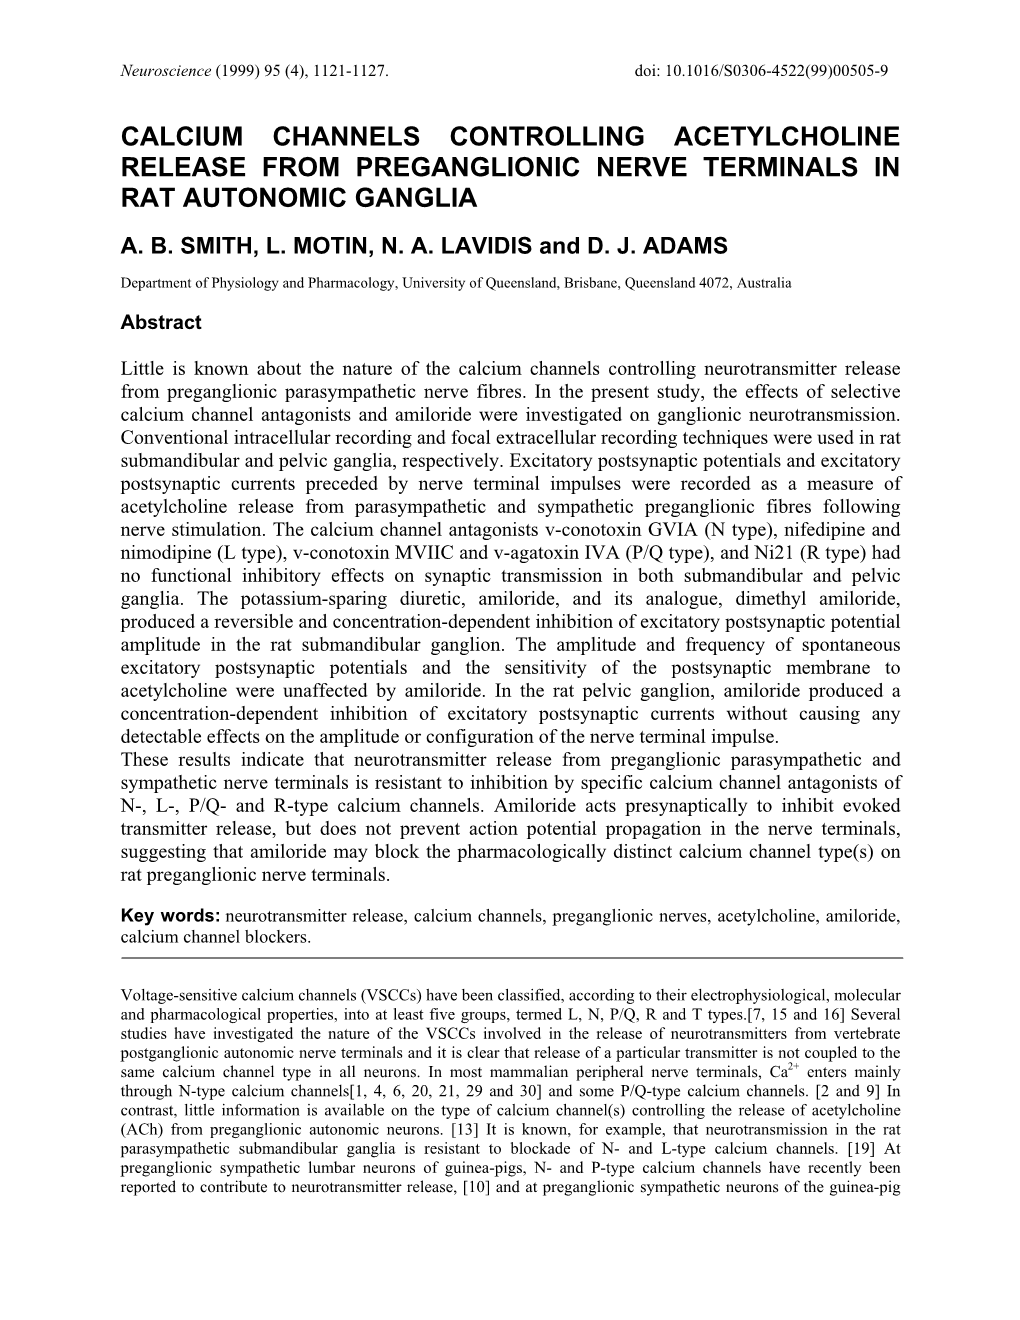 Calcium Channels Controlling Acetylcholine Release from Preganglionic Nerve Terminals in Rat Autonomic Ganglia